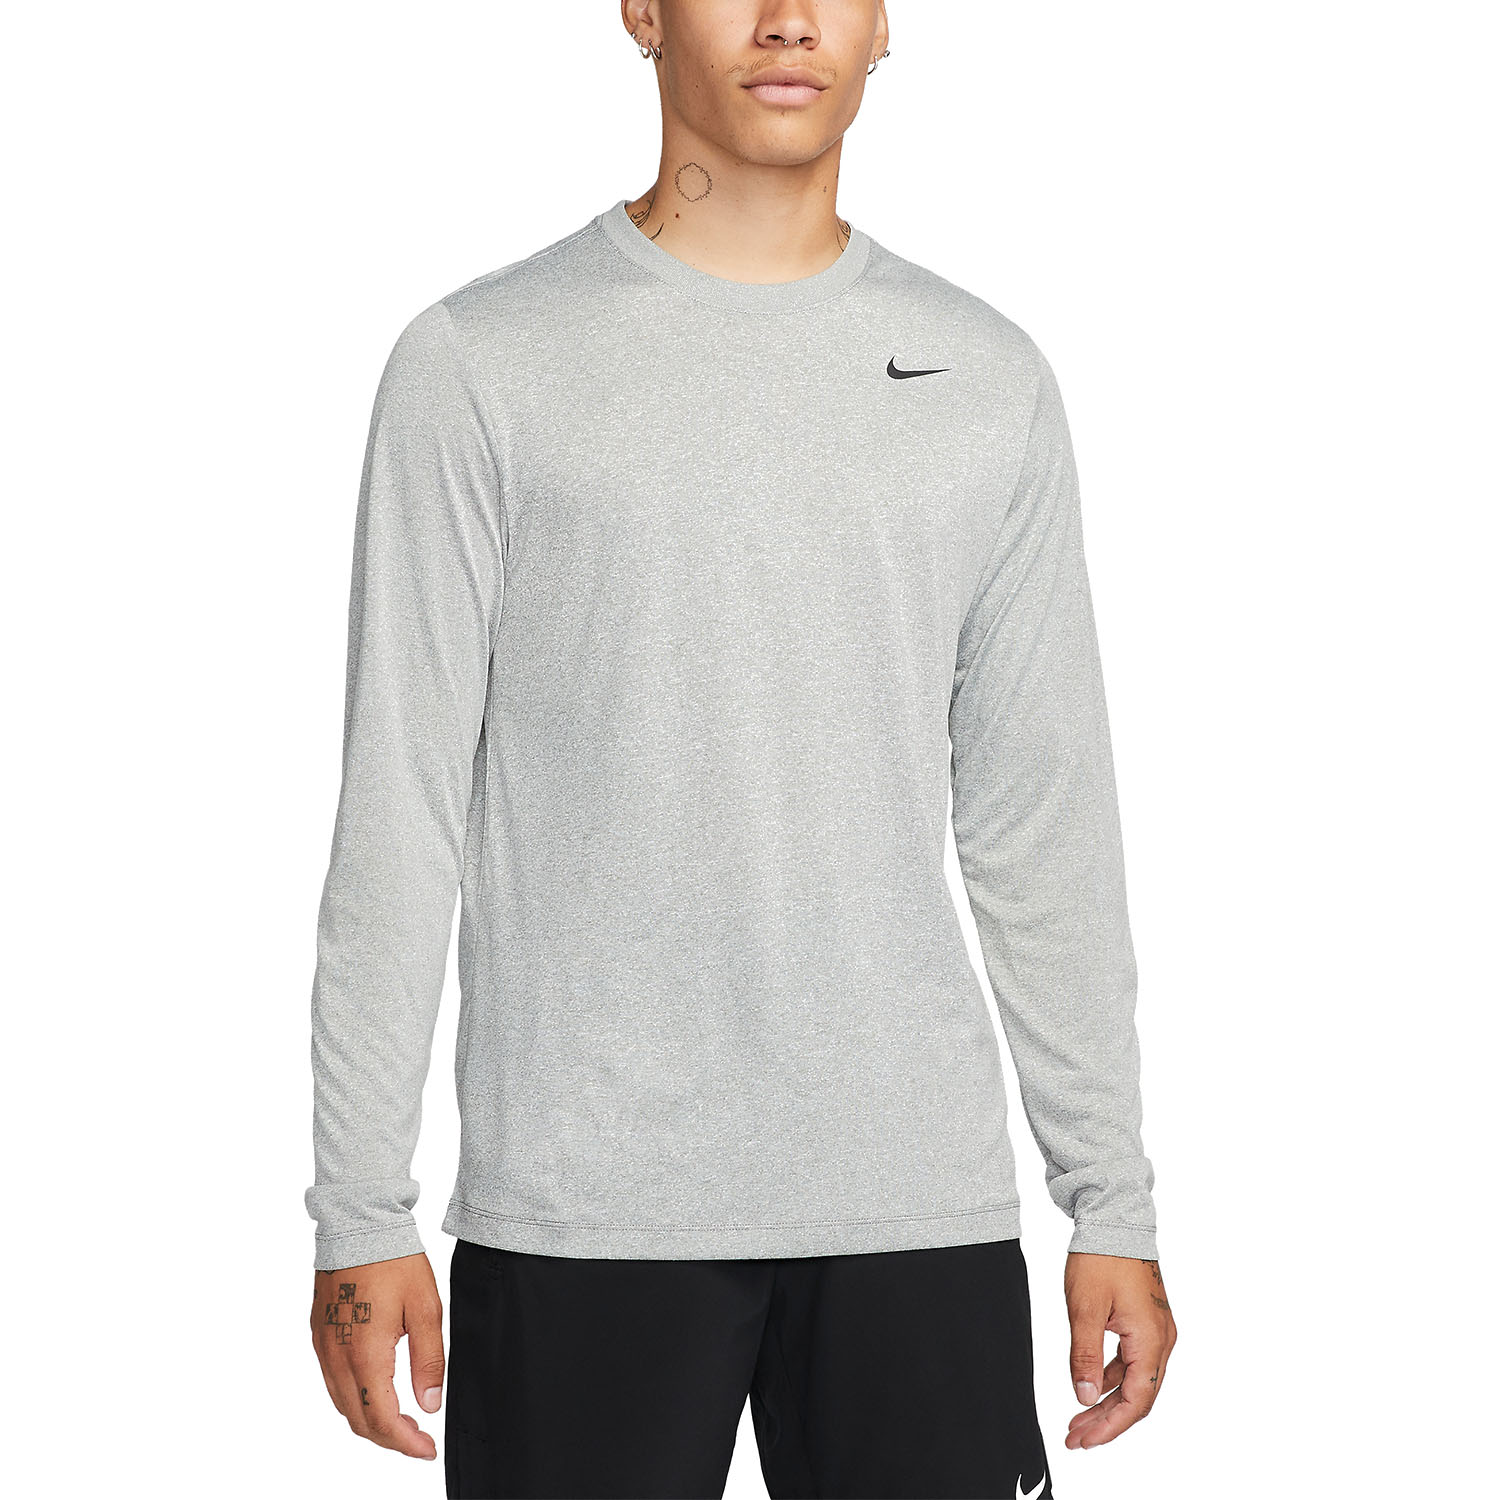 Nike Dri-FIT Legend Shirt - Tumbled Grey/Flt Silver Heather/Black